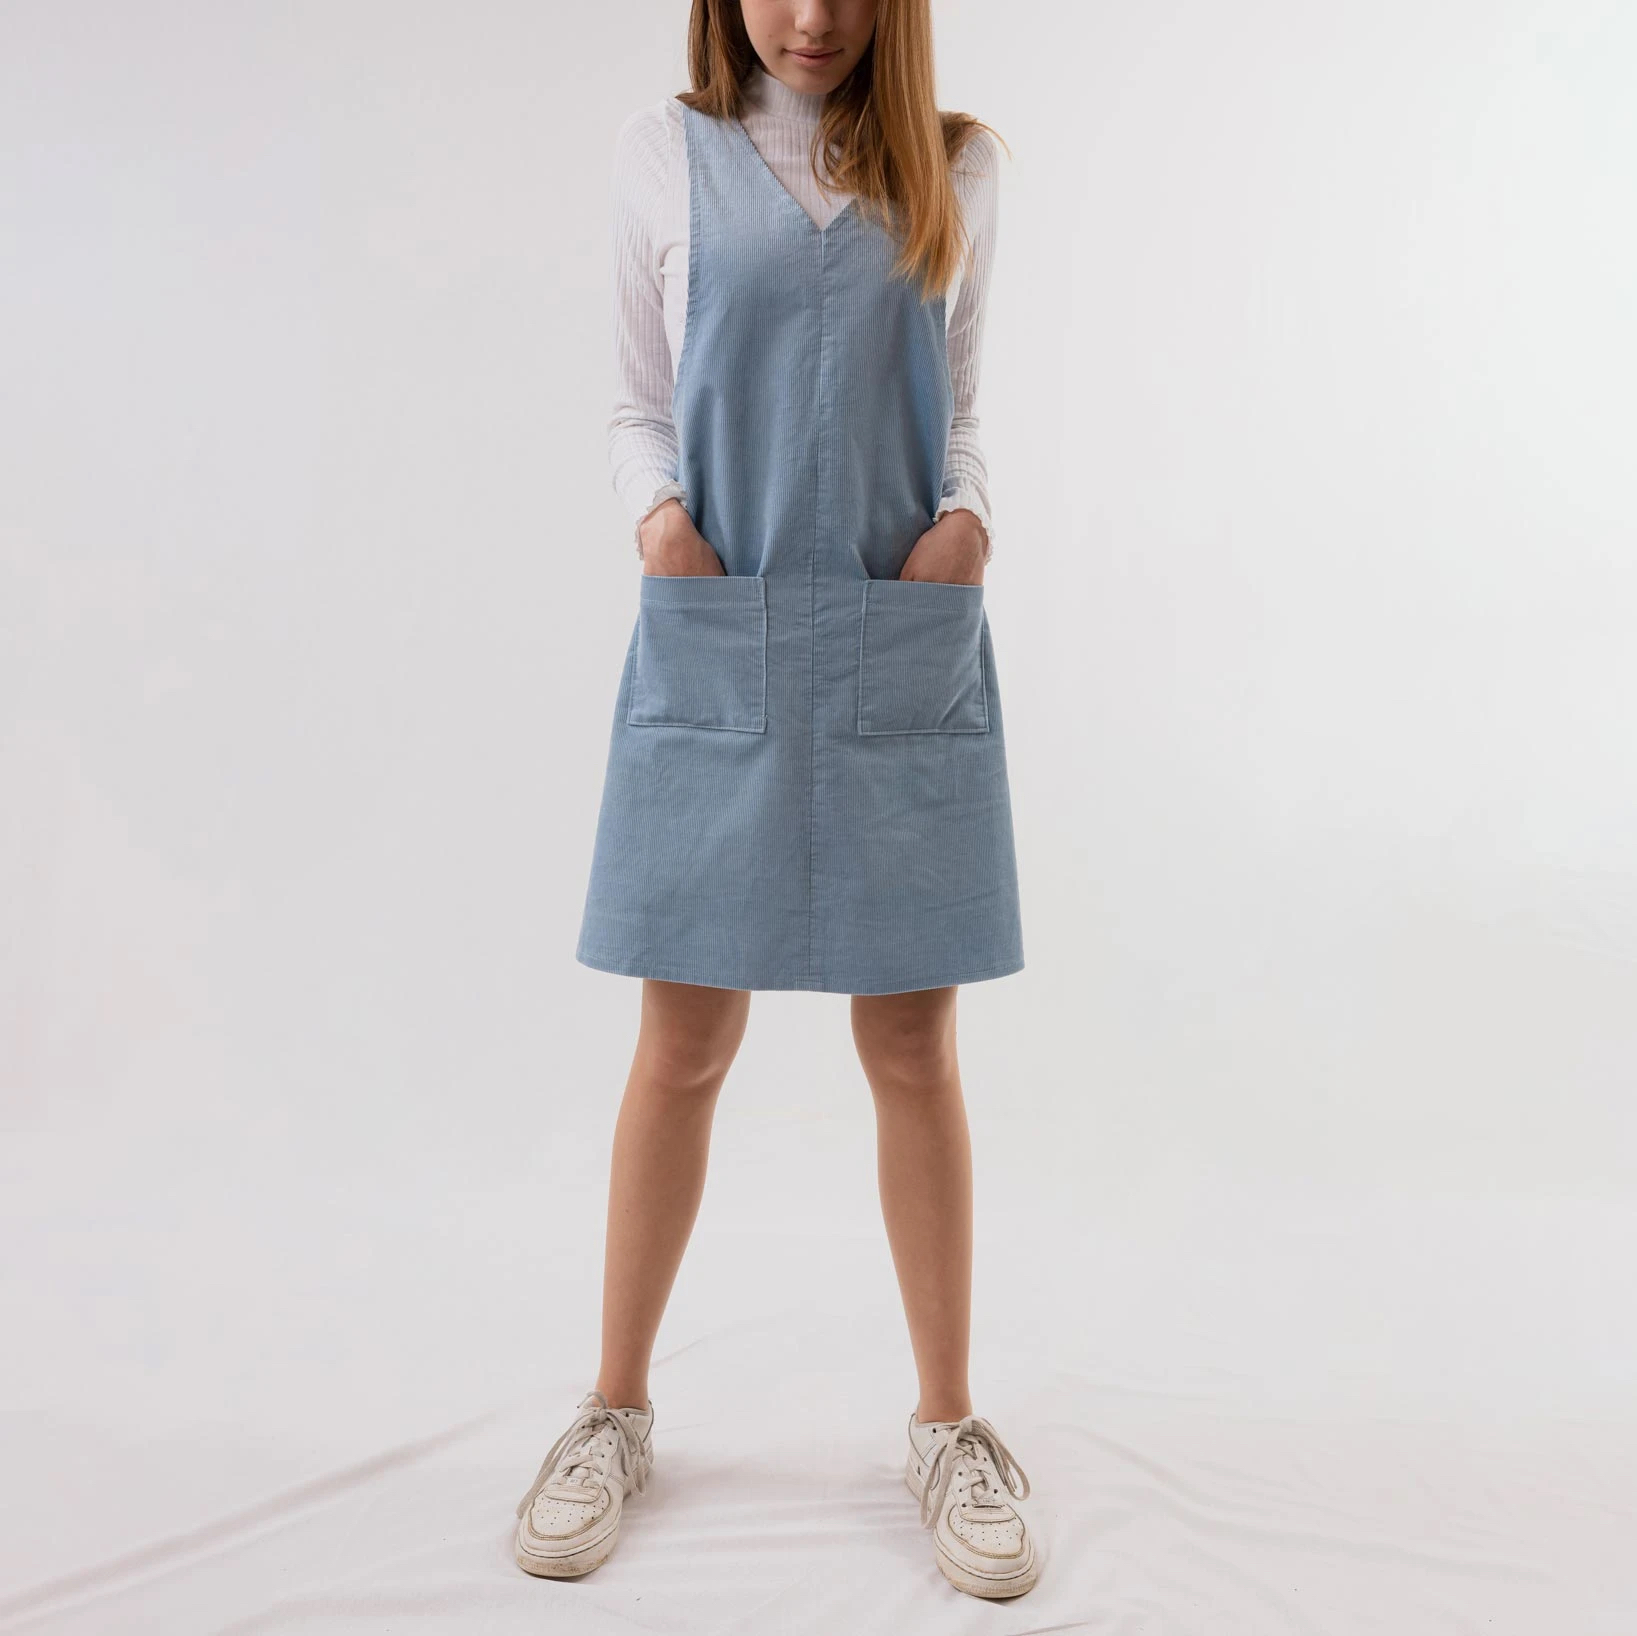 Sydney Pinafore Dress - FREE sewing pattern (12mths-4T) - Sew Modern Kids